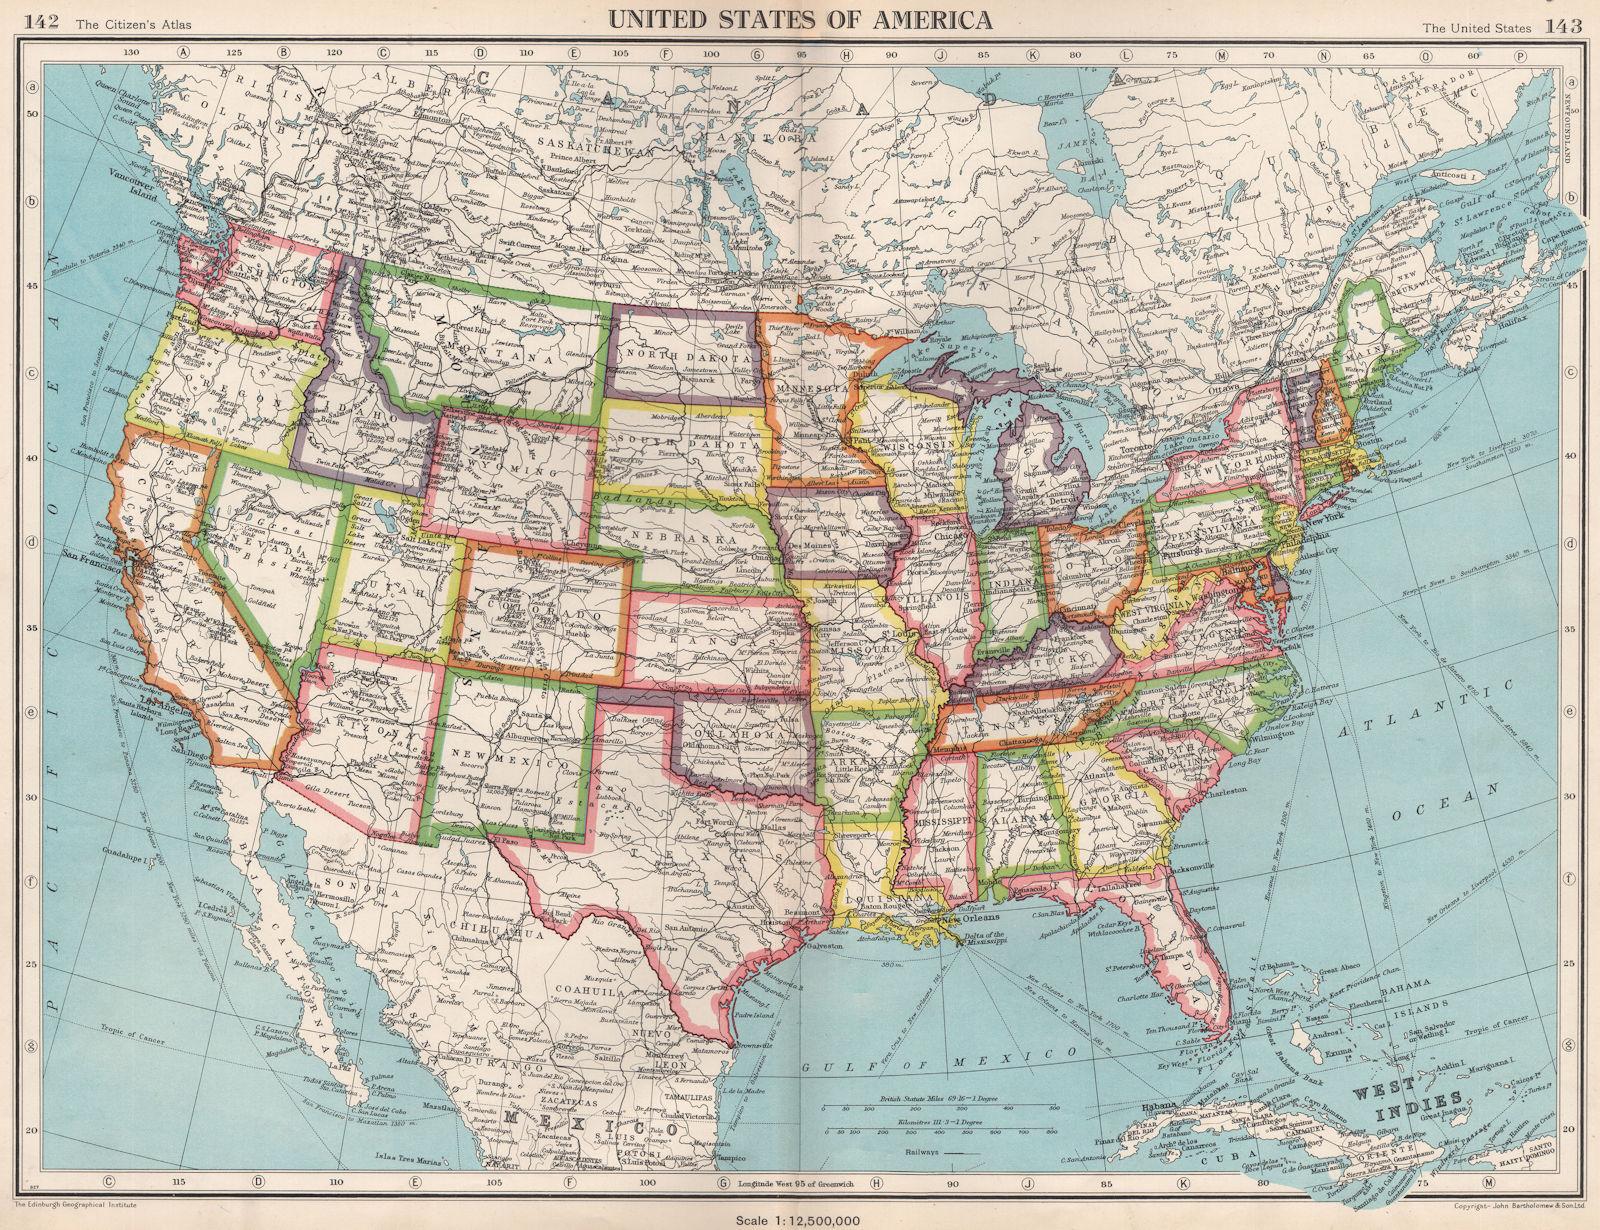 Associate Product USA. United States of America. State map. BARTHOLOMEW 1952 old vintage